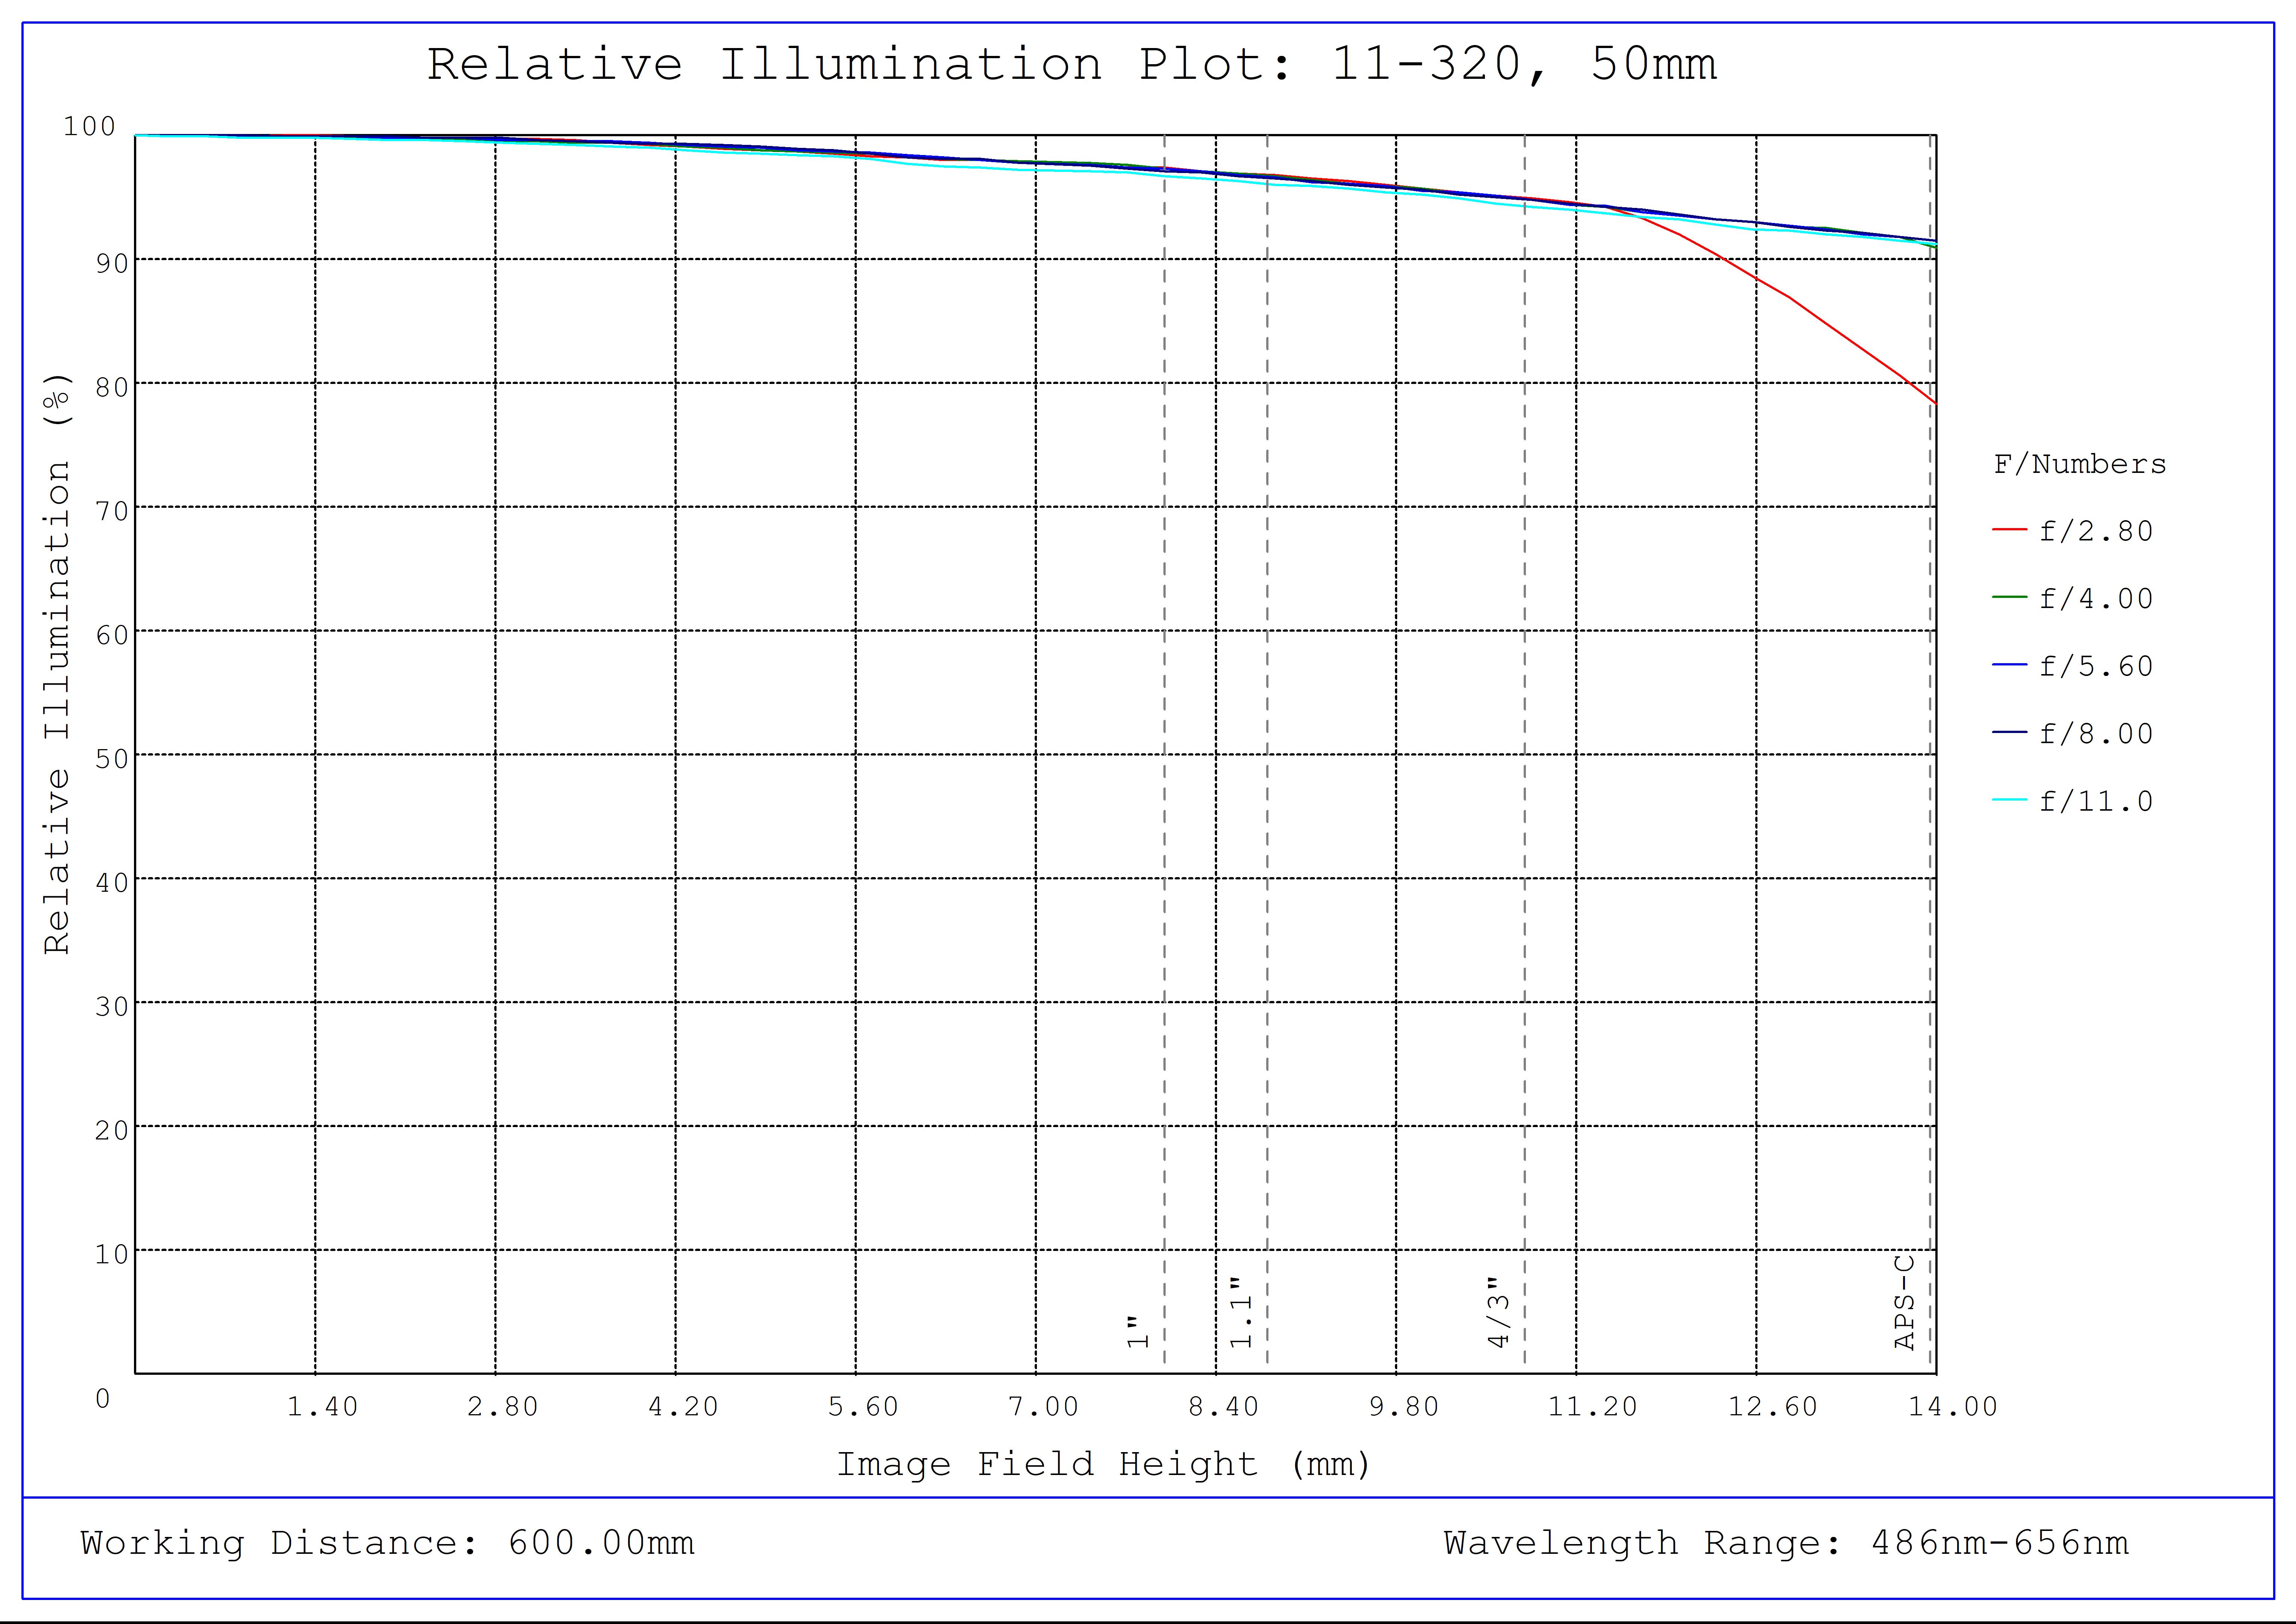 #11-320, 50mm CA Series Fixed Focal Length Lens, Relative Illumination Plot